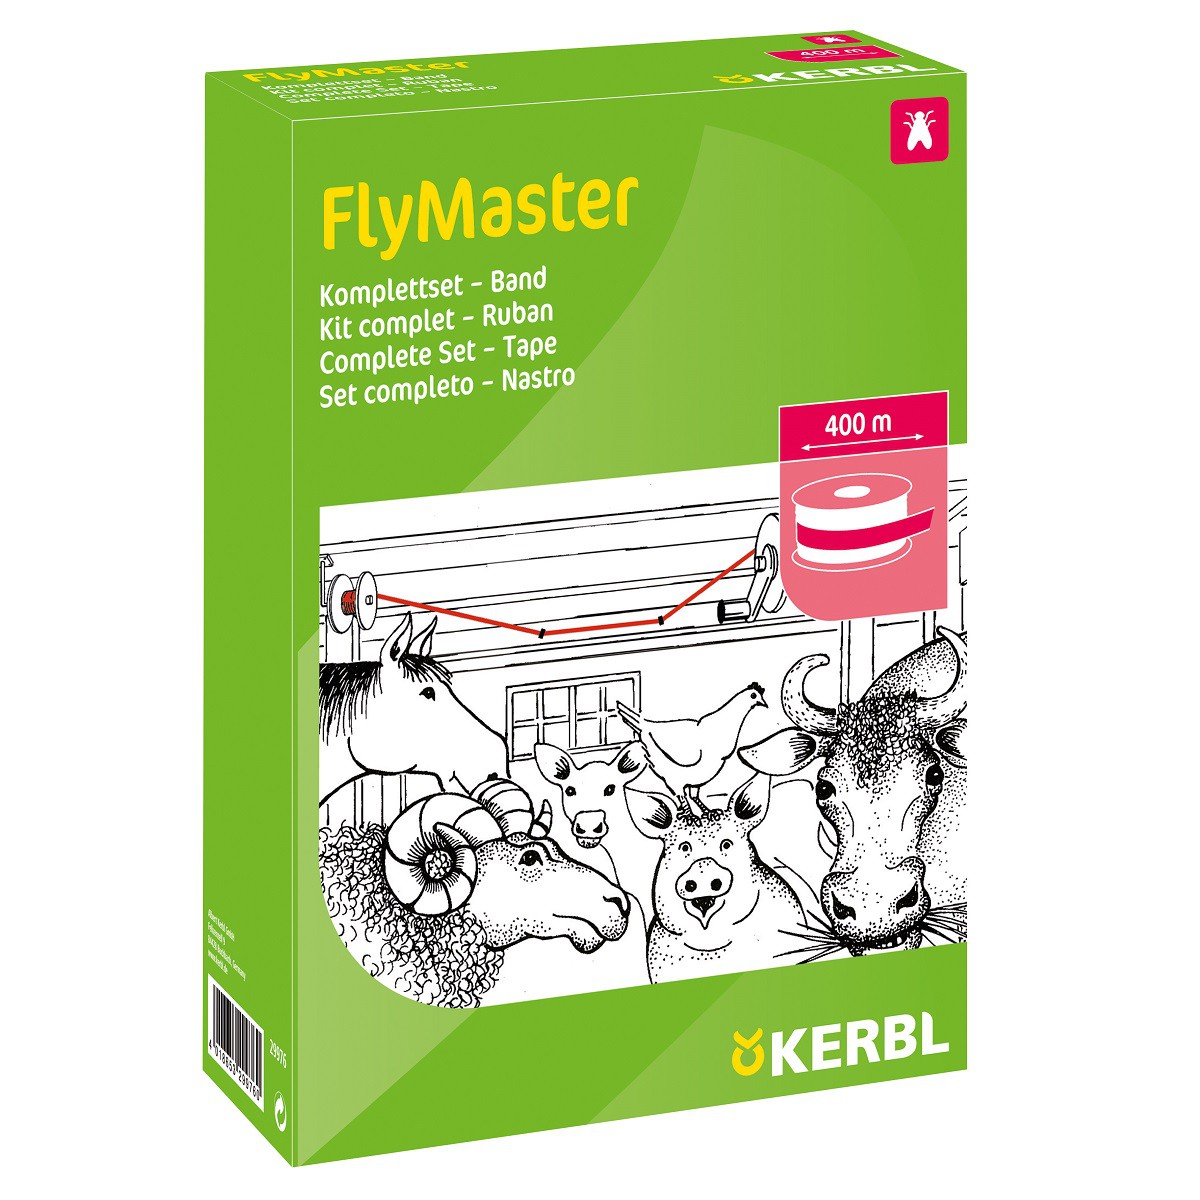 Fly catcher FlyMaster tape 400 m complete kit